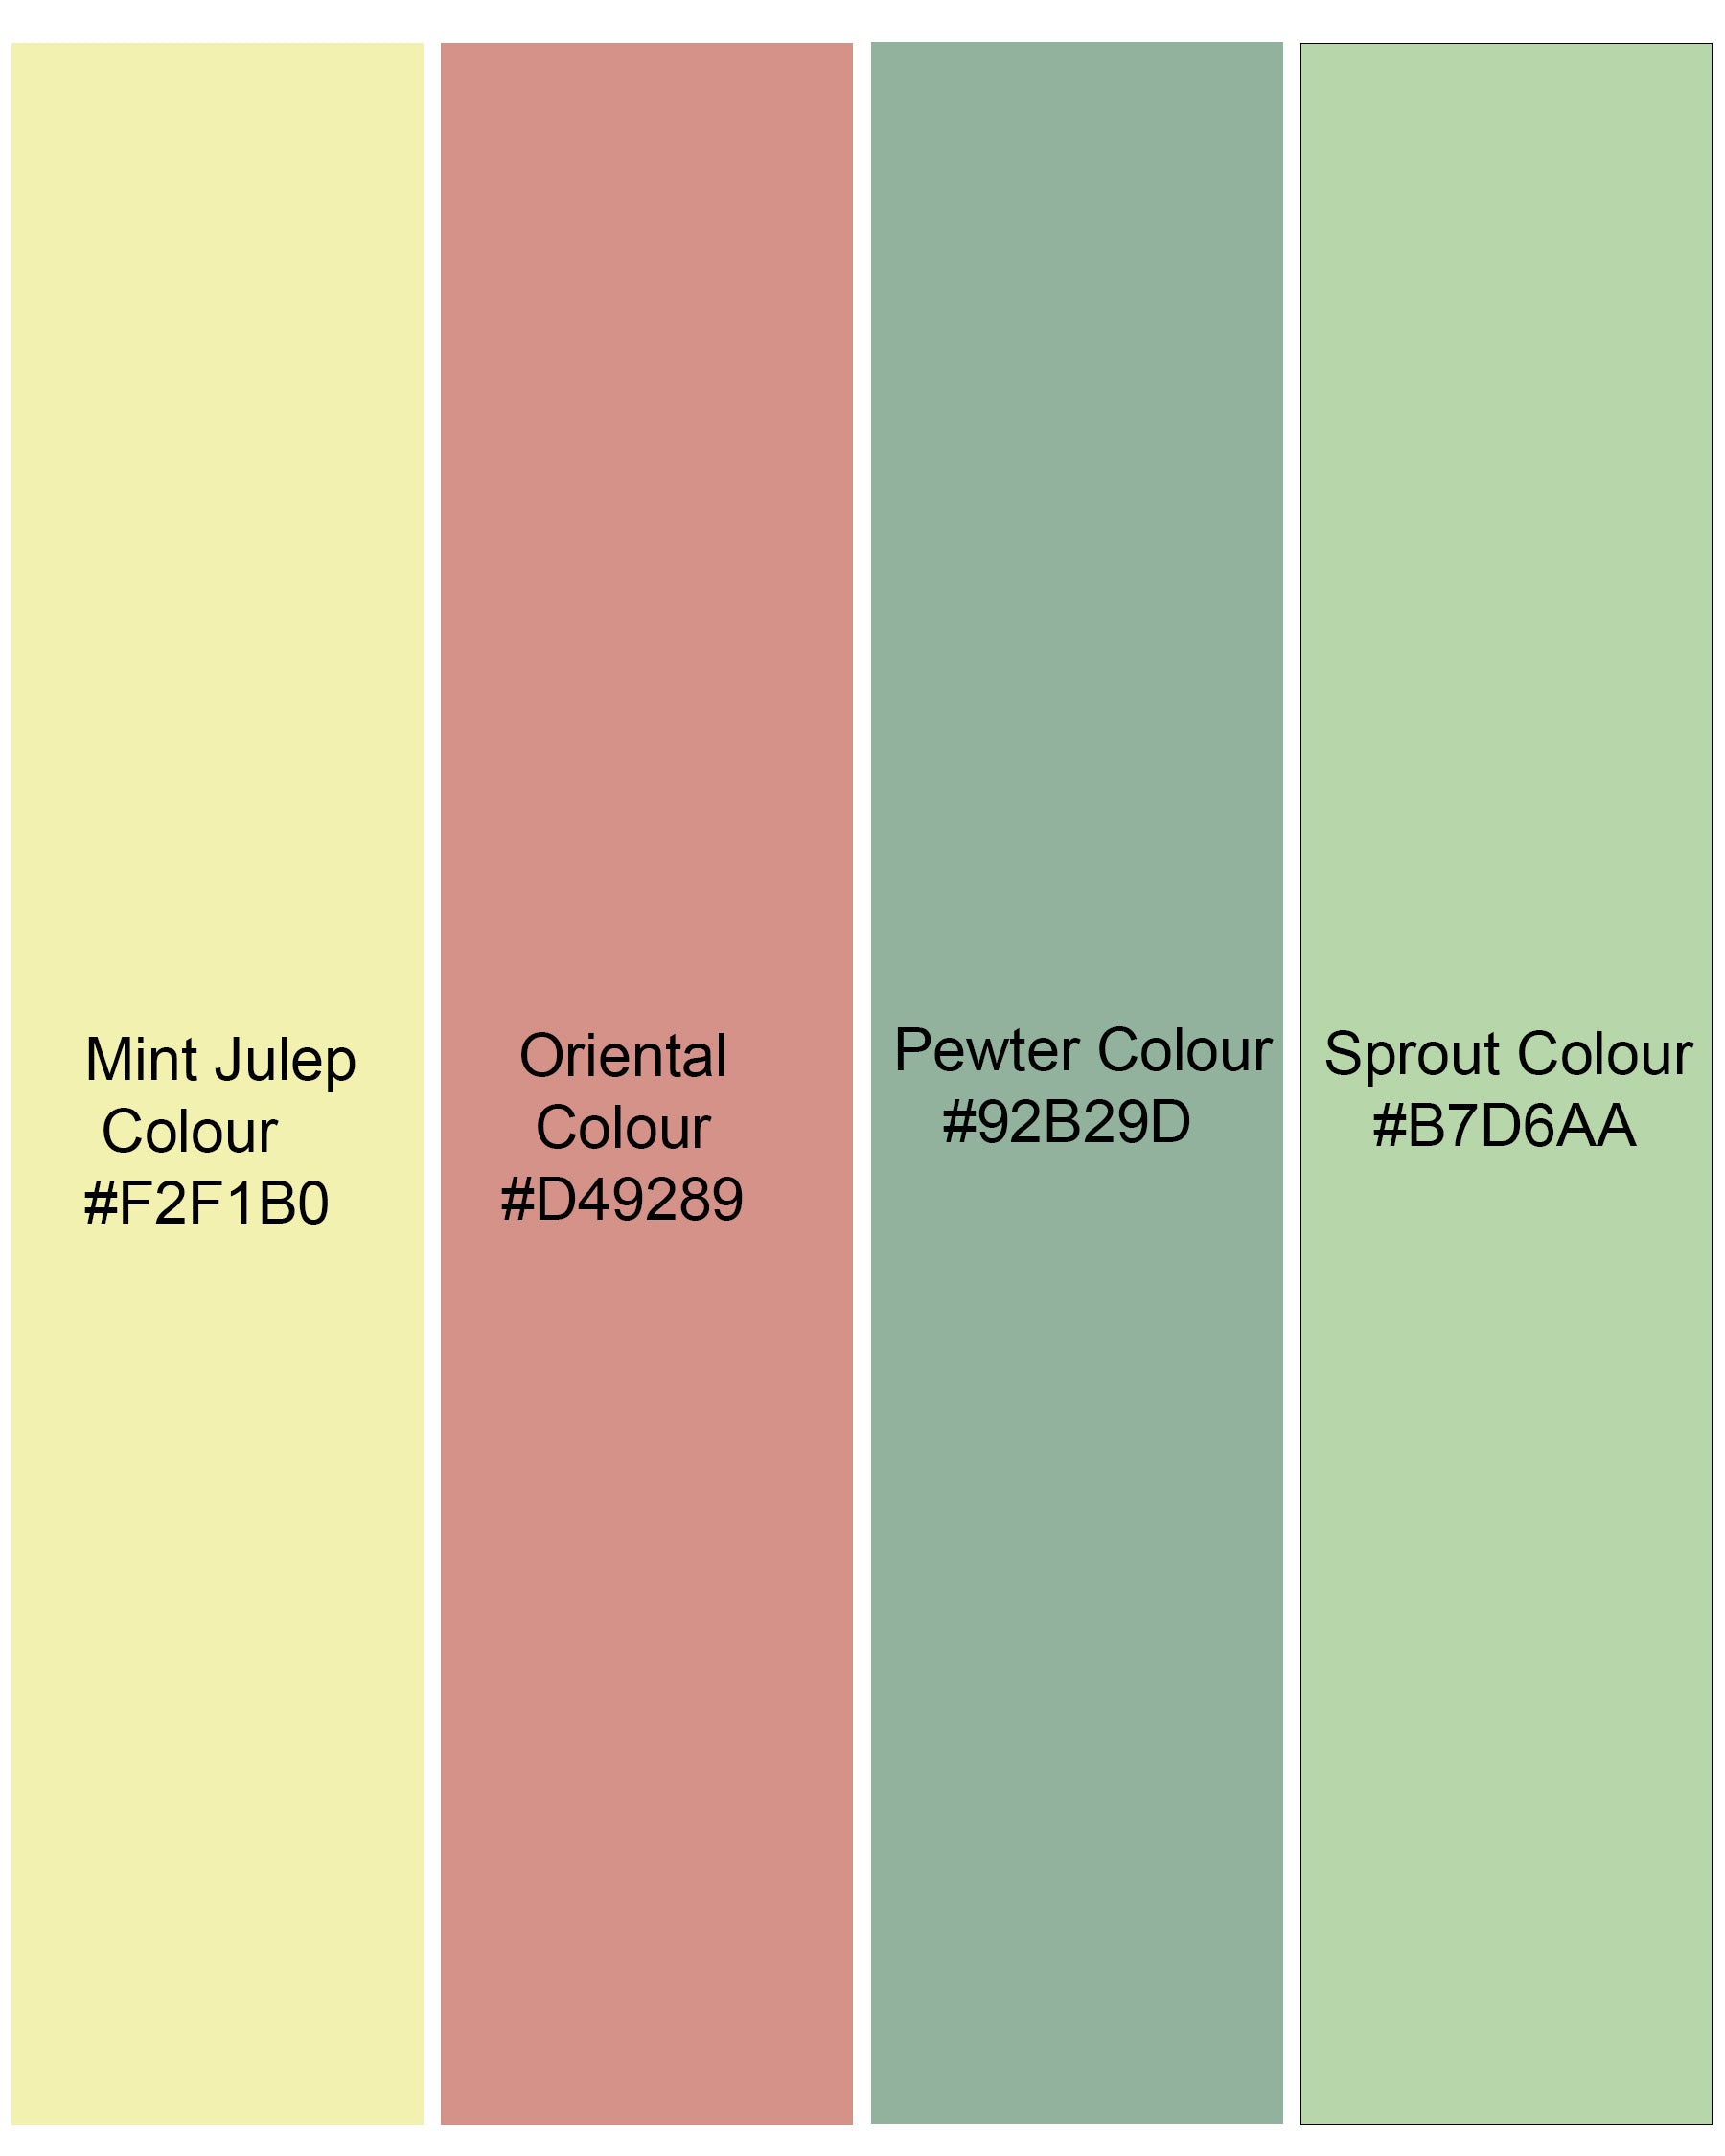 Mint Julep Light Yellow with Oriental Baby Pink Multicolour Striped Luxurious Linen Shirt 7997-BD-38,7997-BD-H-38,7997-BD-39,7997-BD-H-39,7997-BD-40,7997-BD-H-40,7997-BD-42,7997-BD-H-42,7997-BD-44,7997-BD-H-44,7997-BD-46,7997-BD-H-46,7997-BD-48,7997-BD-H-48,7997-BD-50,7997-BD-H-50,7997-BD-52,7997-BD-H-52